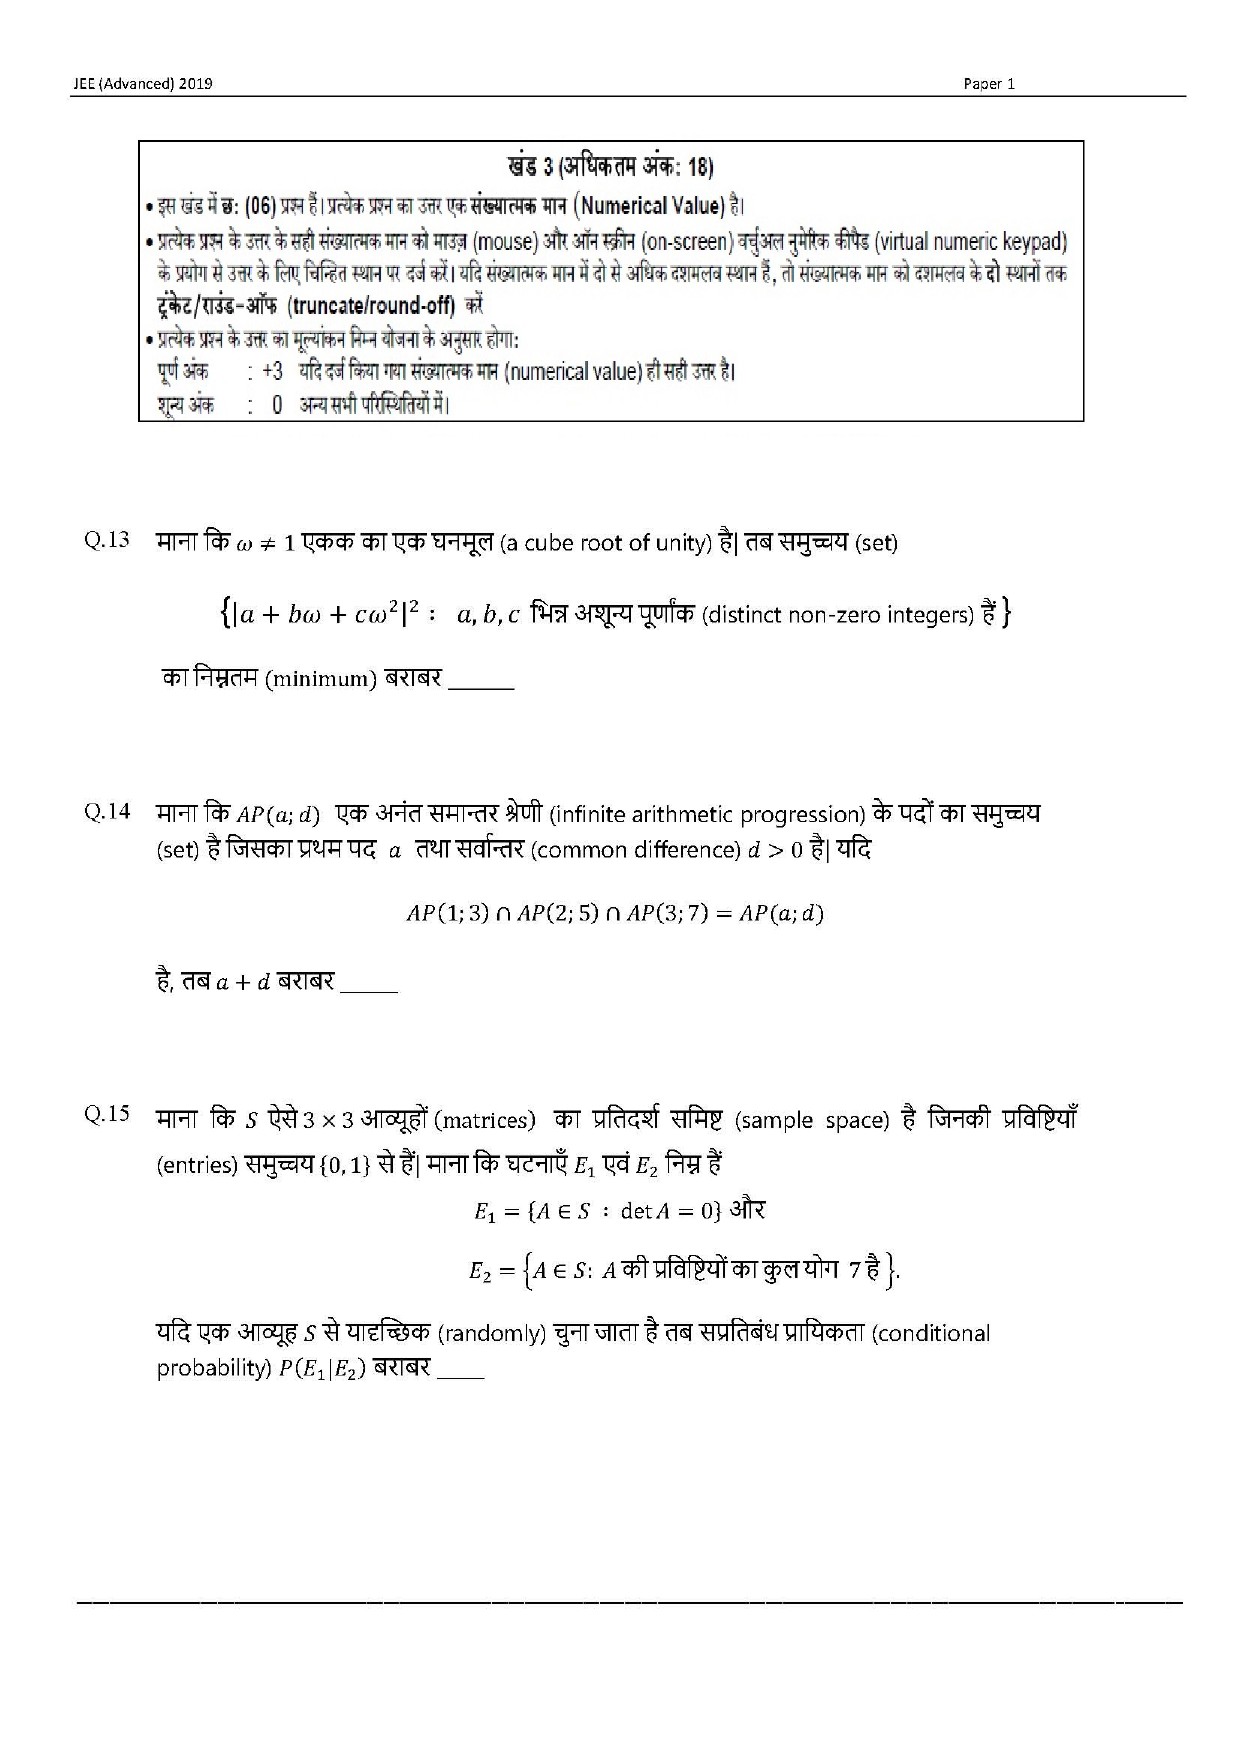 JEE Advanced Hindi Question Paper 2019 Paper 1 Mathematics 8